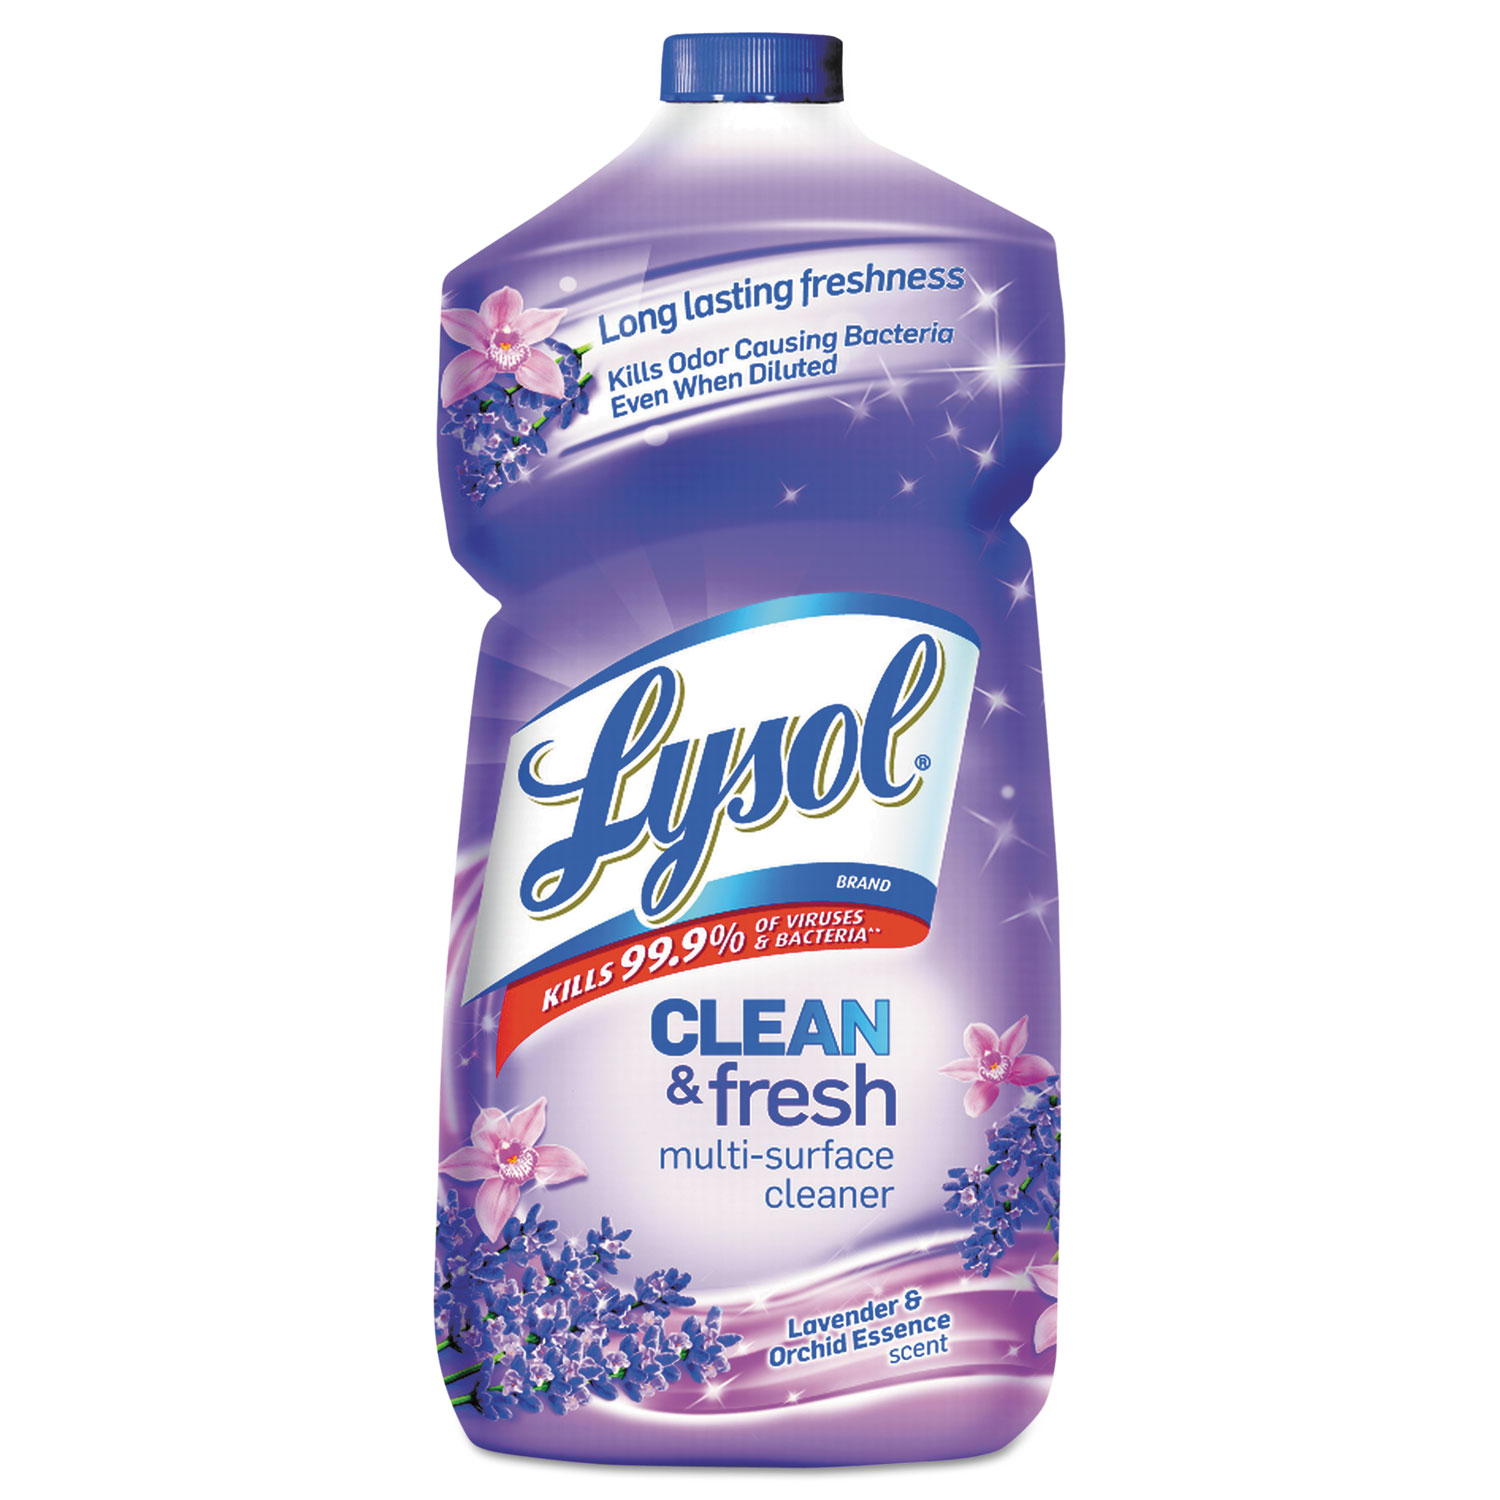 Clean & Fresh Multi-Surface Cleaner, Lavender & Orchid Scent, 40 oz Bottle